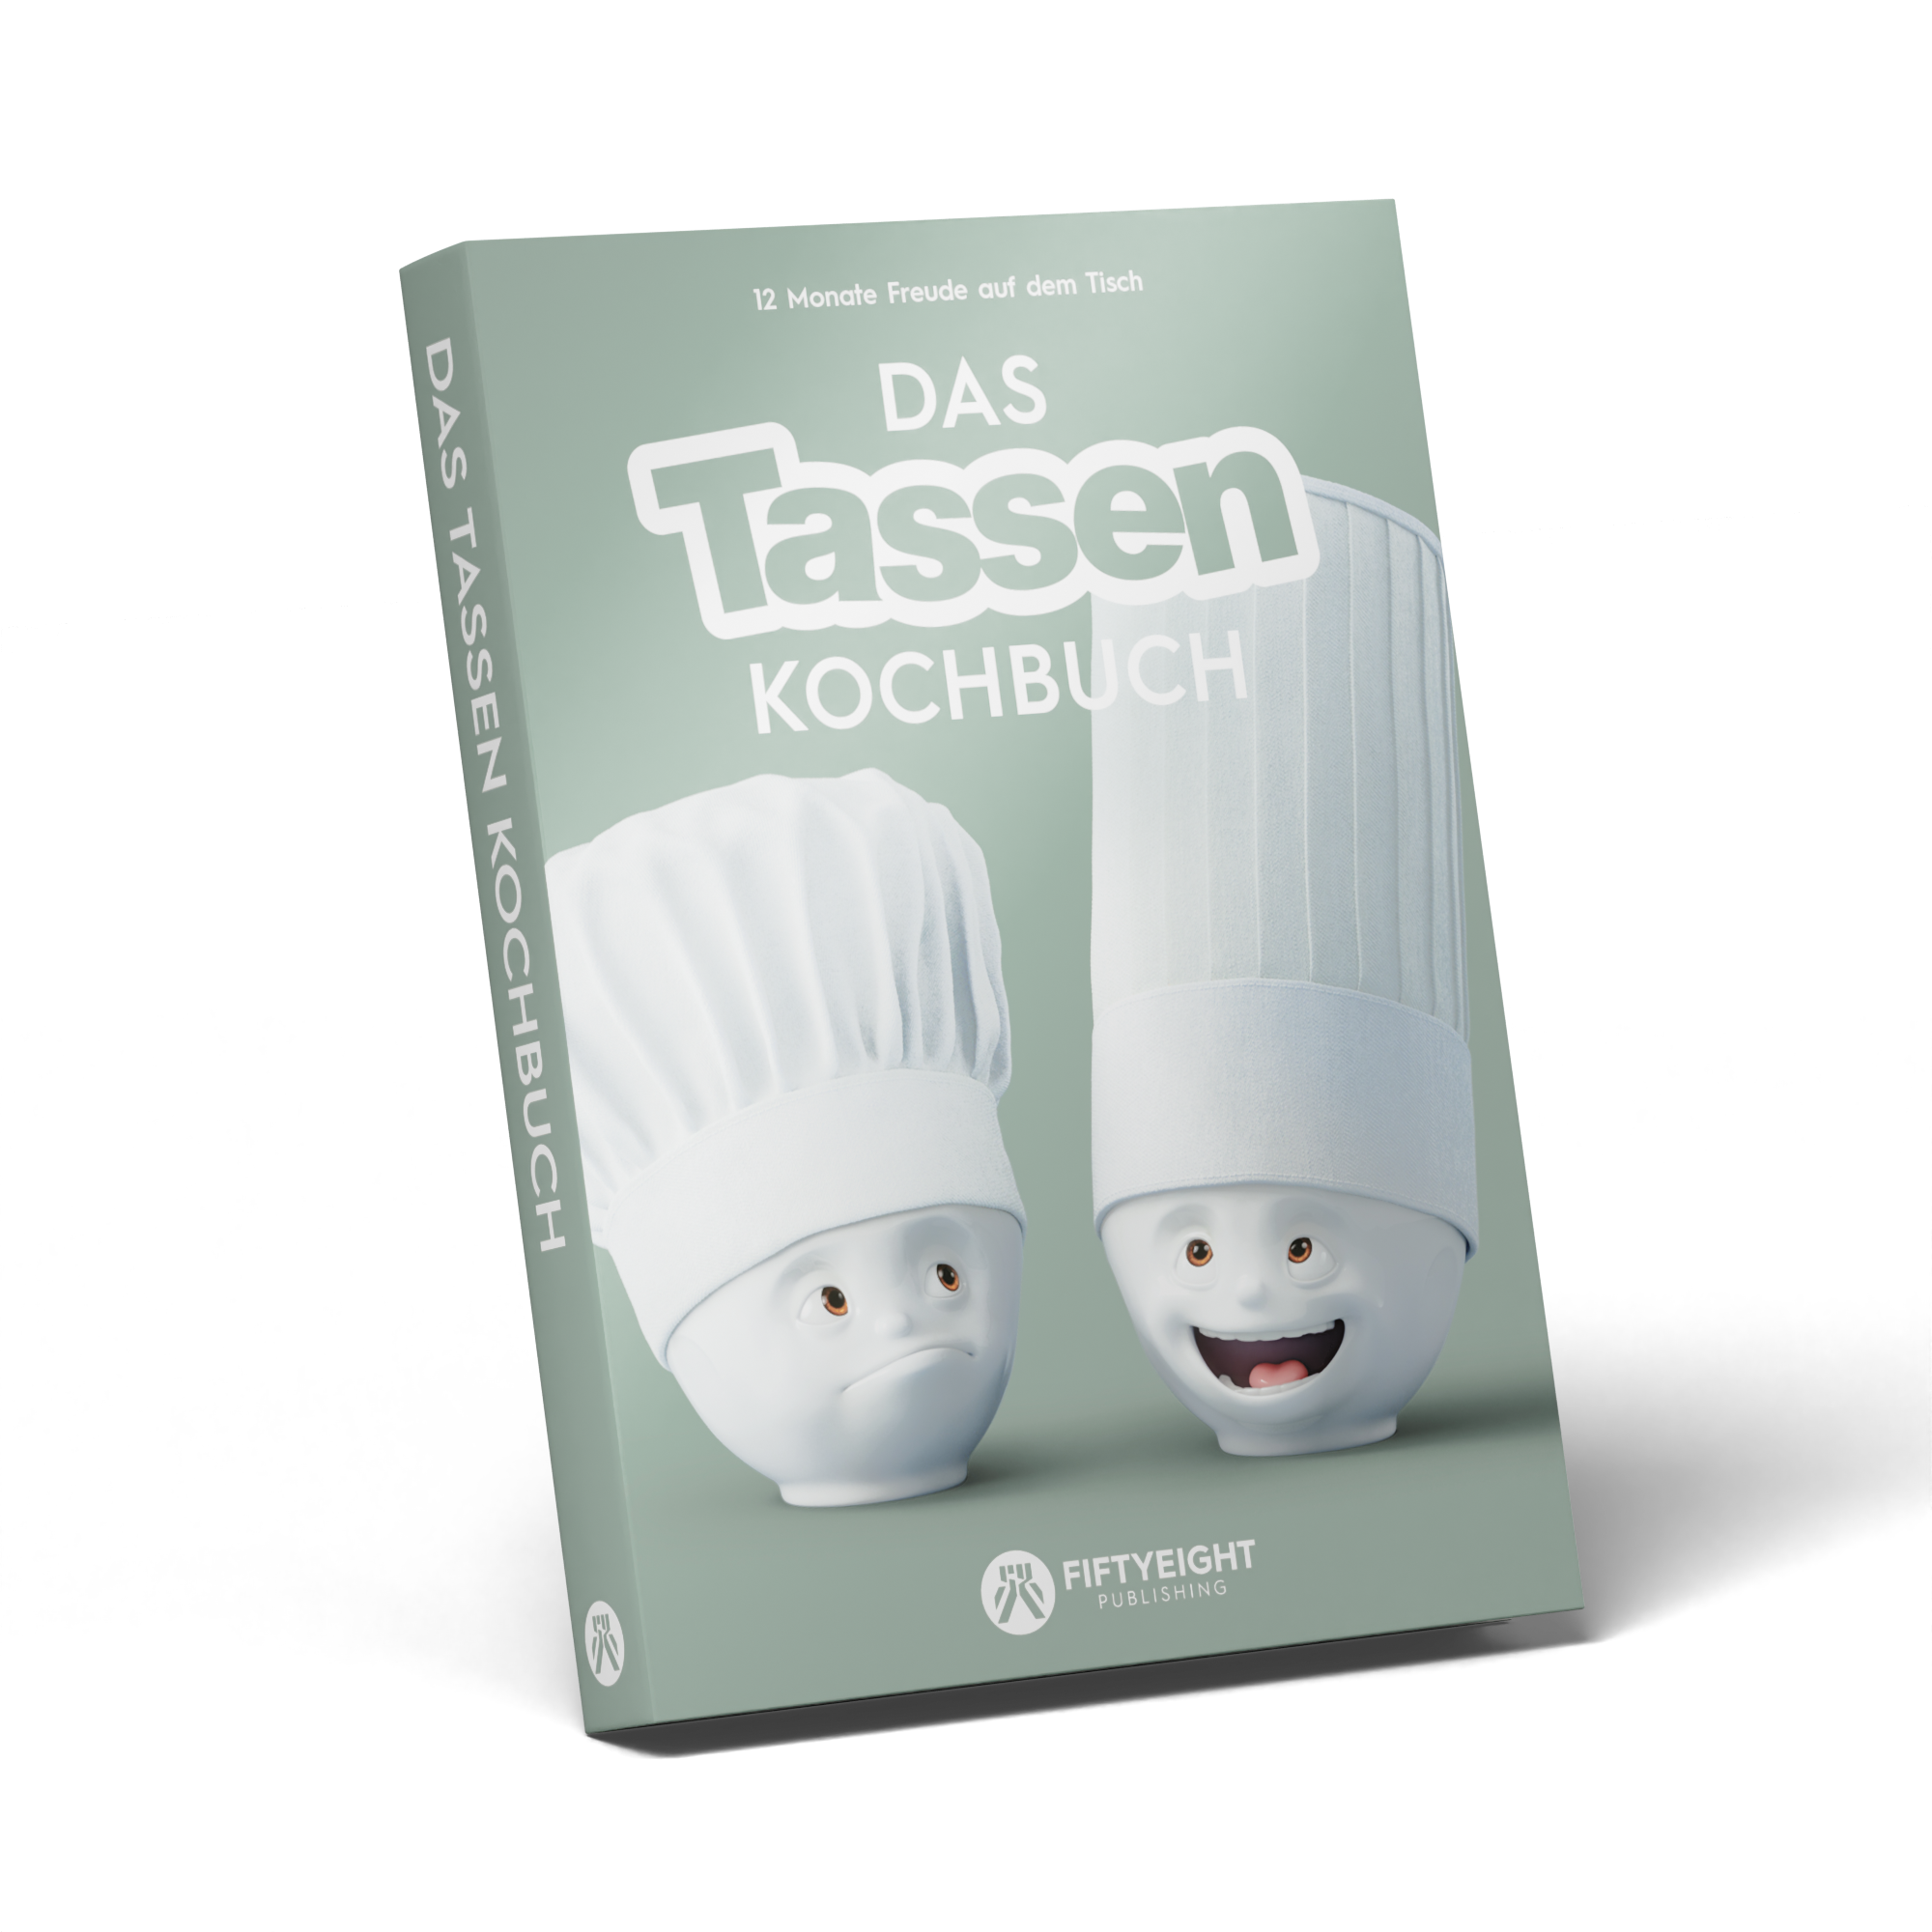 Das TASSEN Kochbuch - TV Tassen